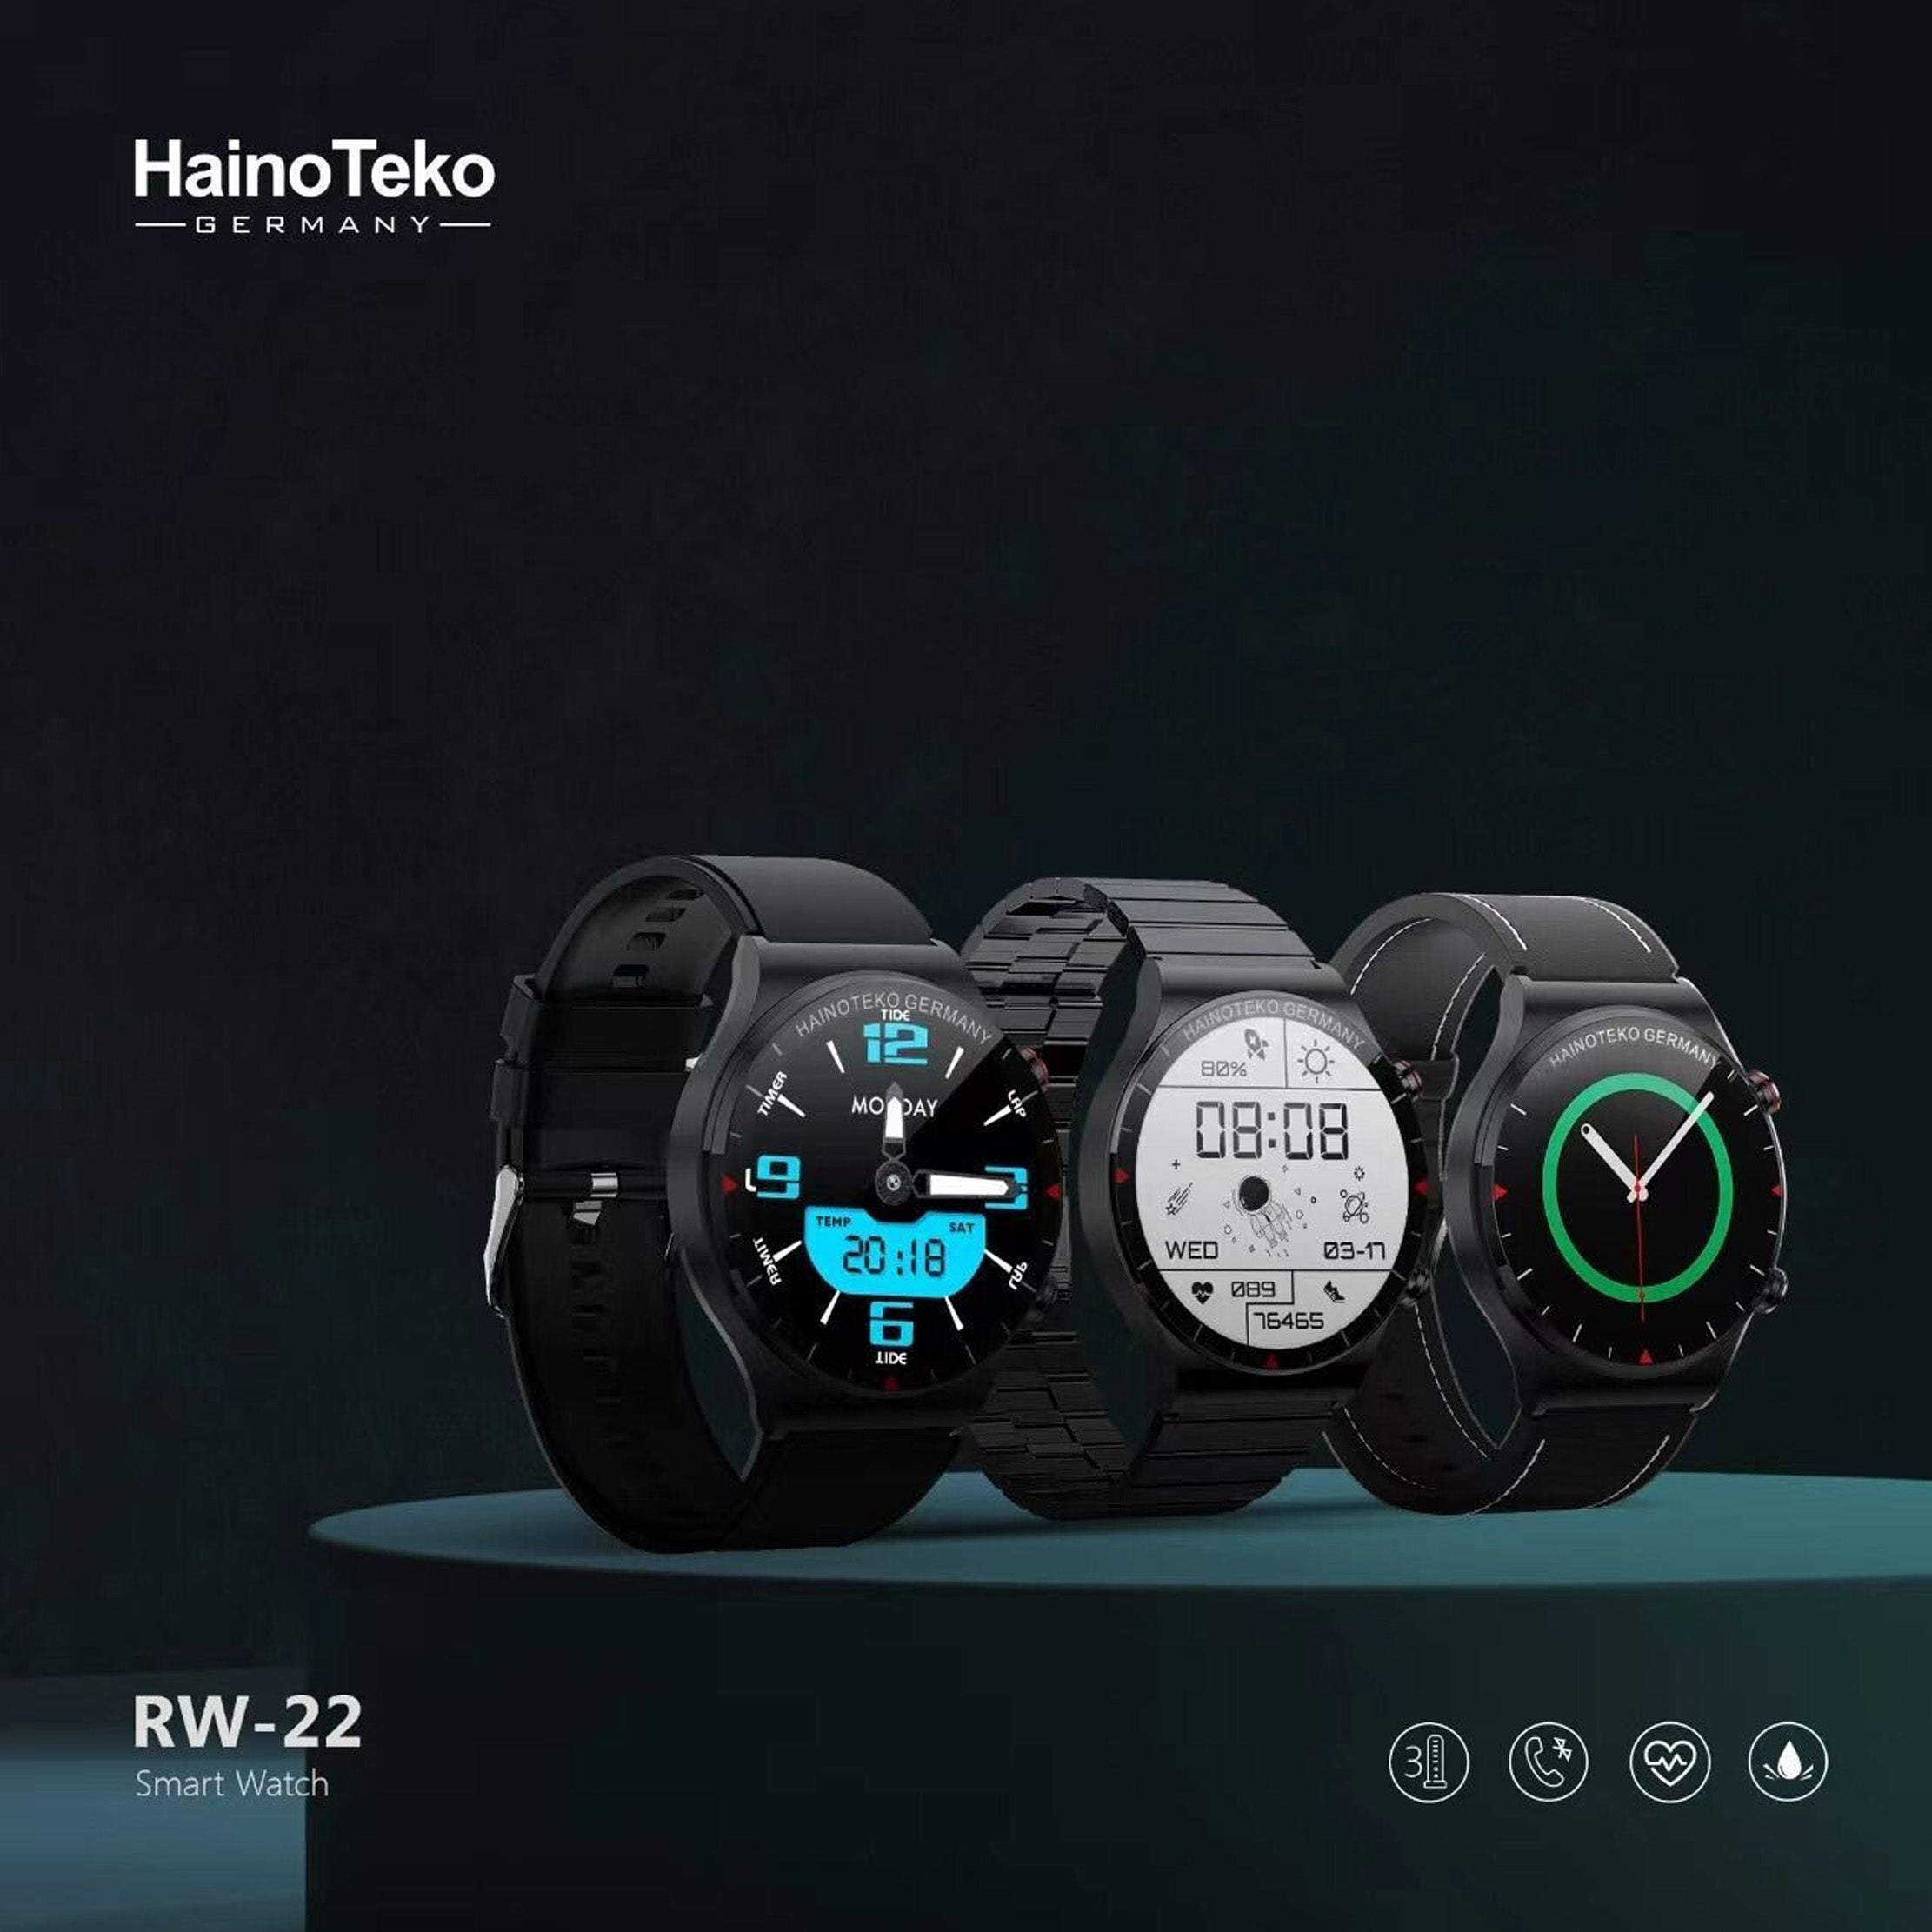 Trending Haino Teko RW22 Germany High Quality smartwatch | Haino Teko RW-22 Smart Watch - HAWAMEBLCX/255